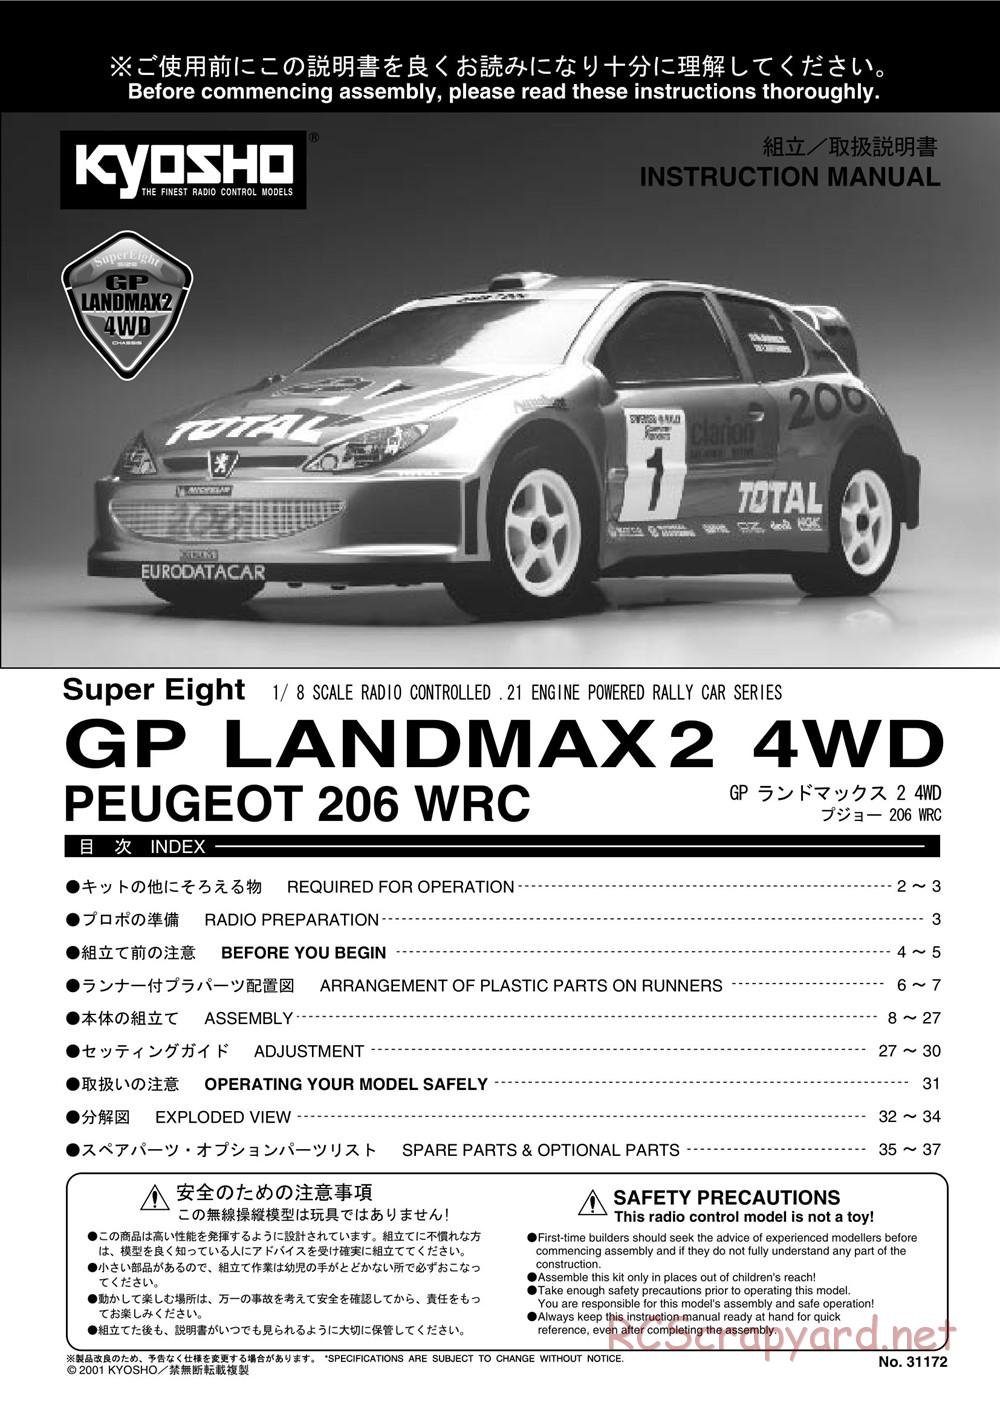 Kyosho - Super Eight GP20 Landmax 2 - Manual - Page 1